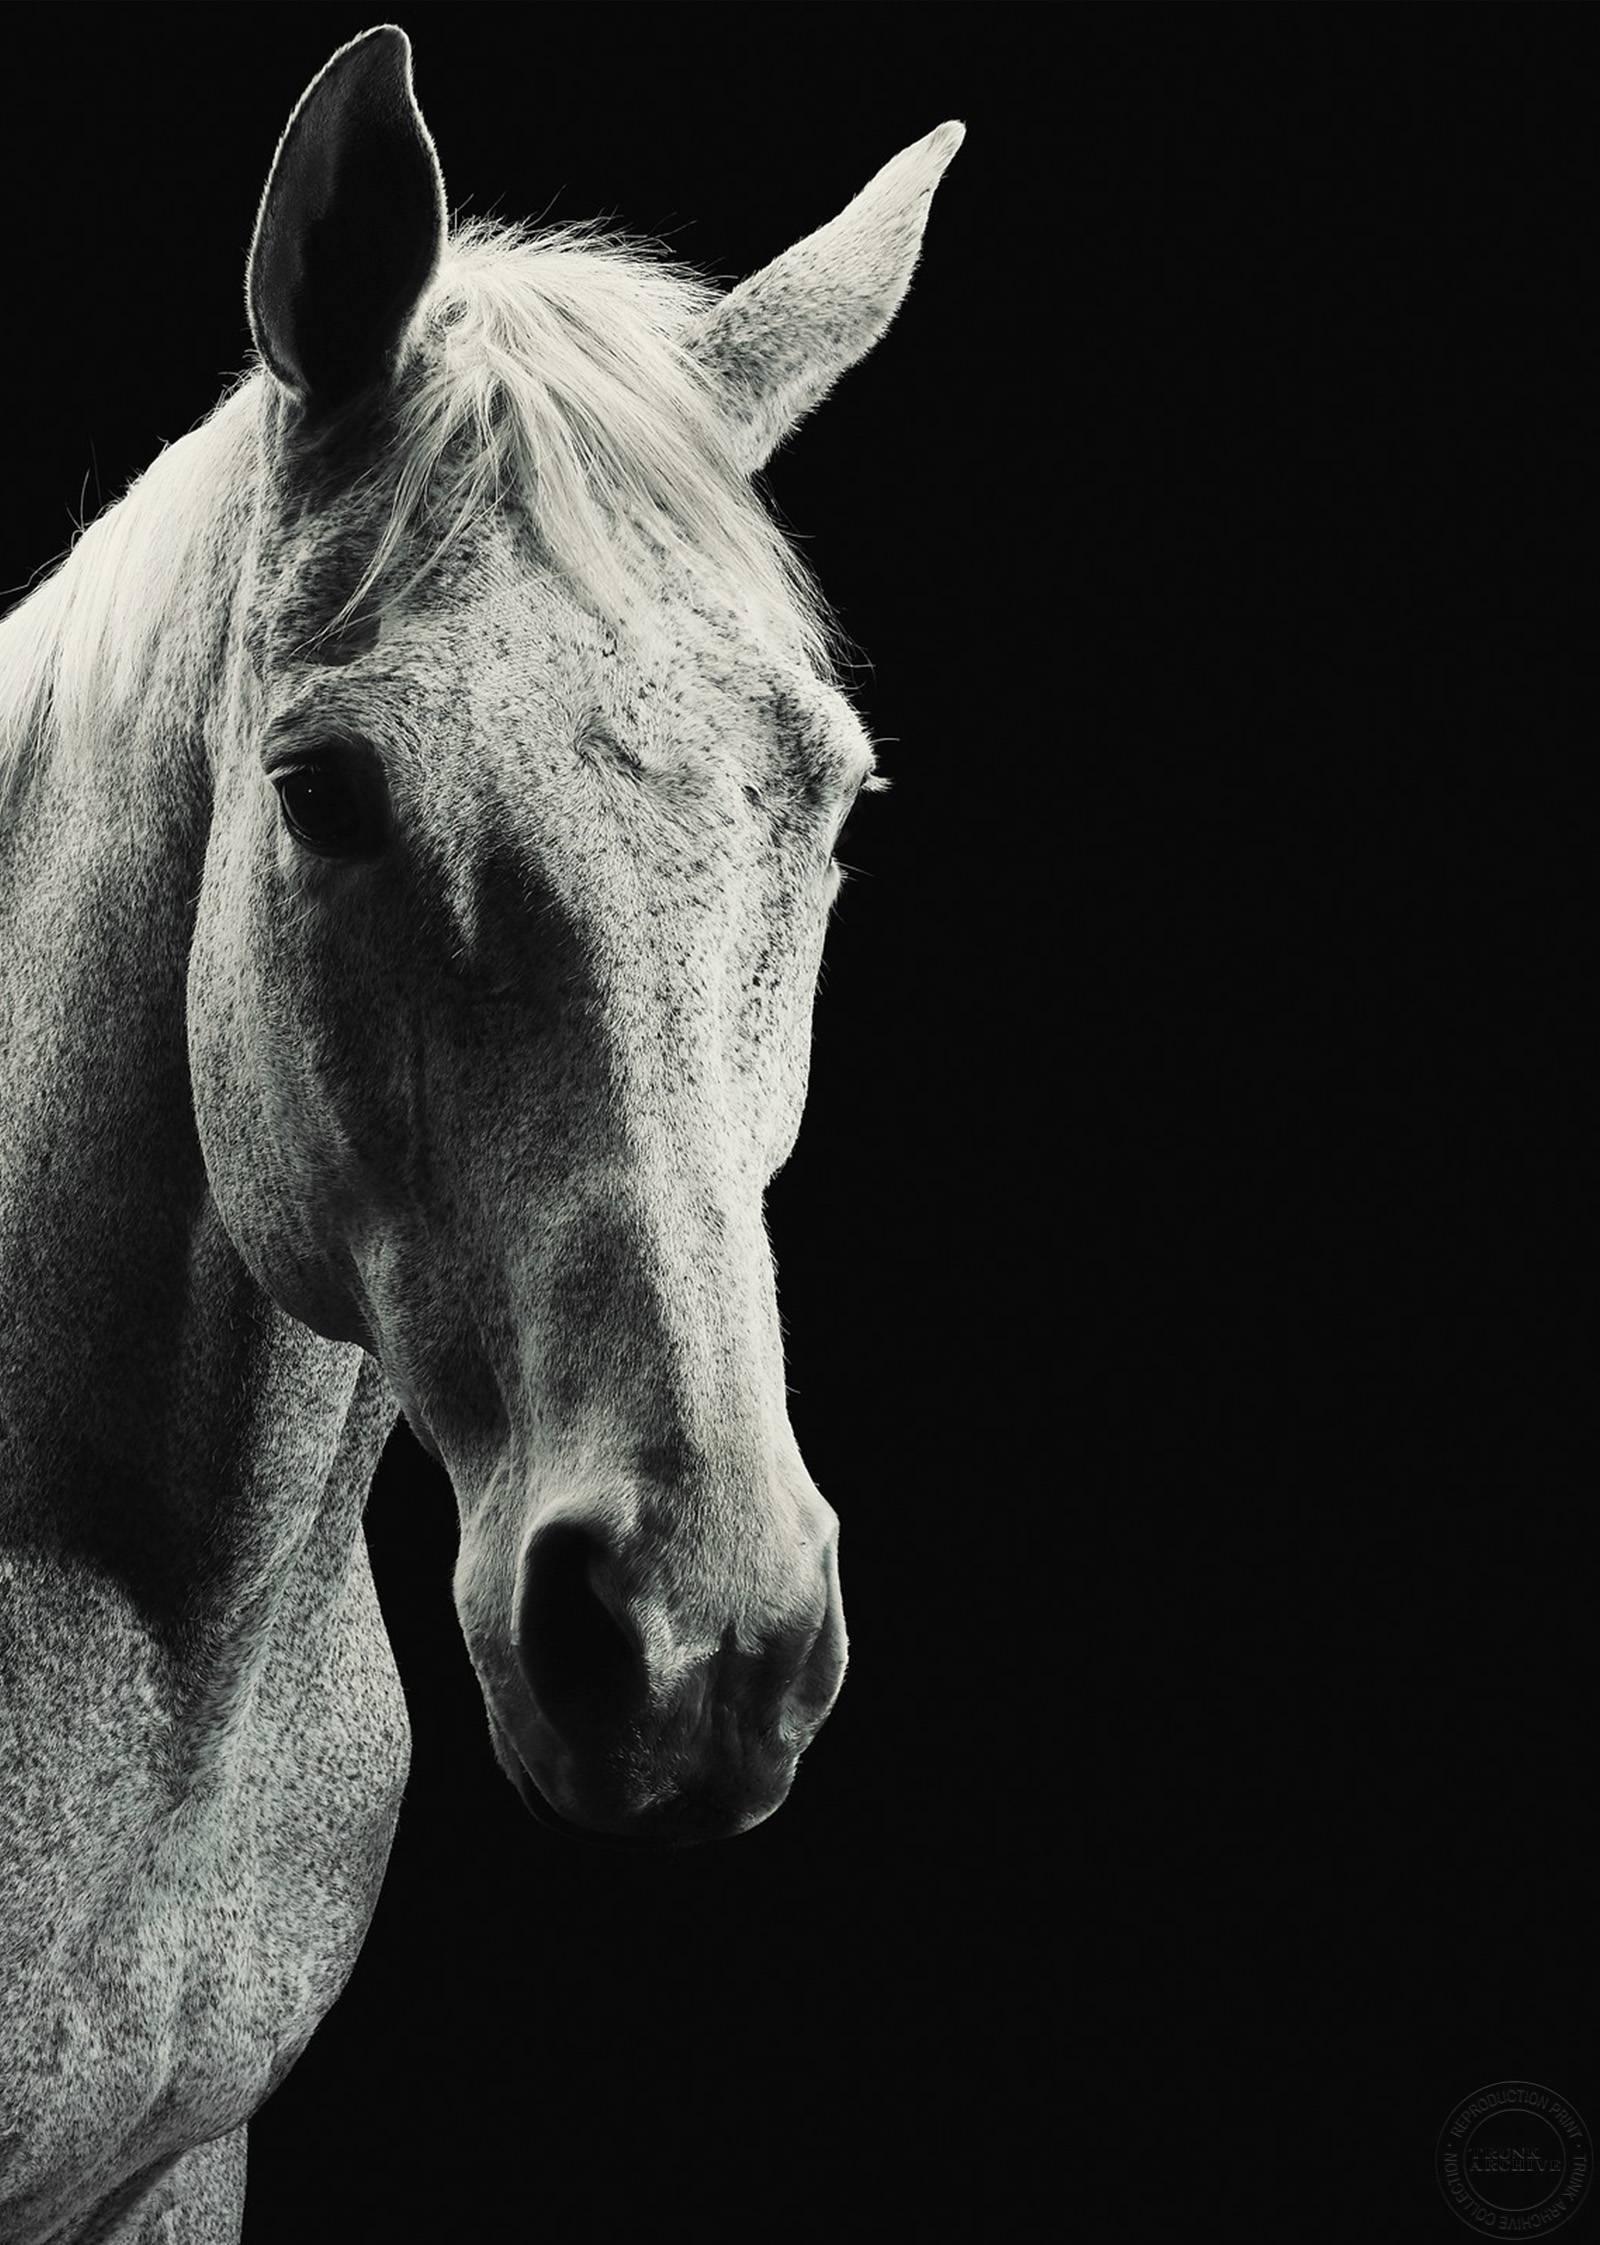 Jamie Chung Black and White Photograph - Animal Portrait (Horse)